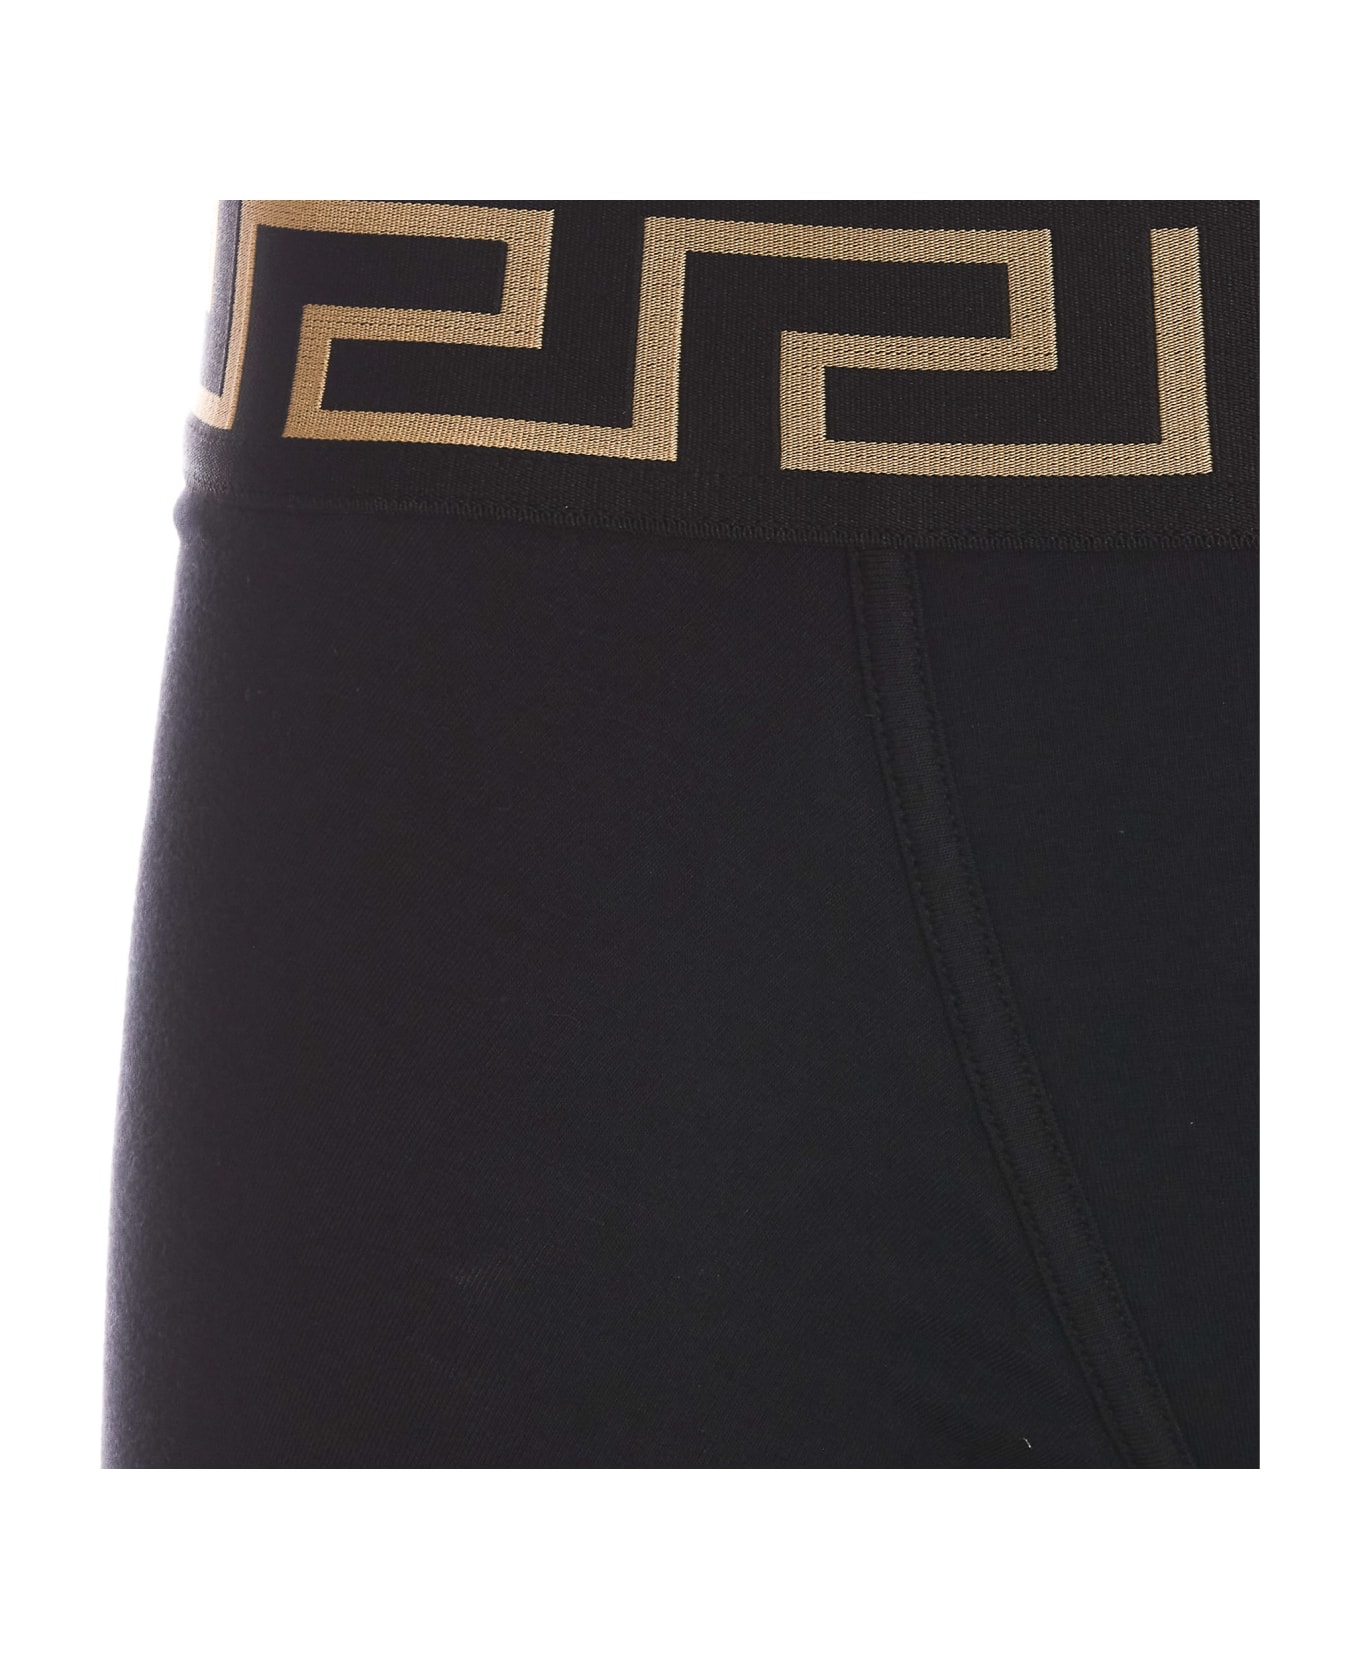 Versace Greca Border Slip Tri-pack - G Black Gold Greek Key